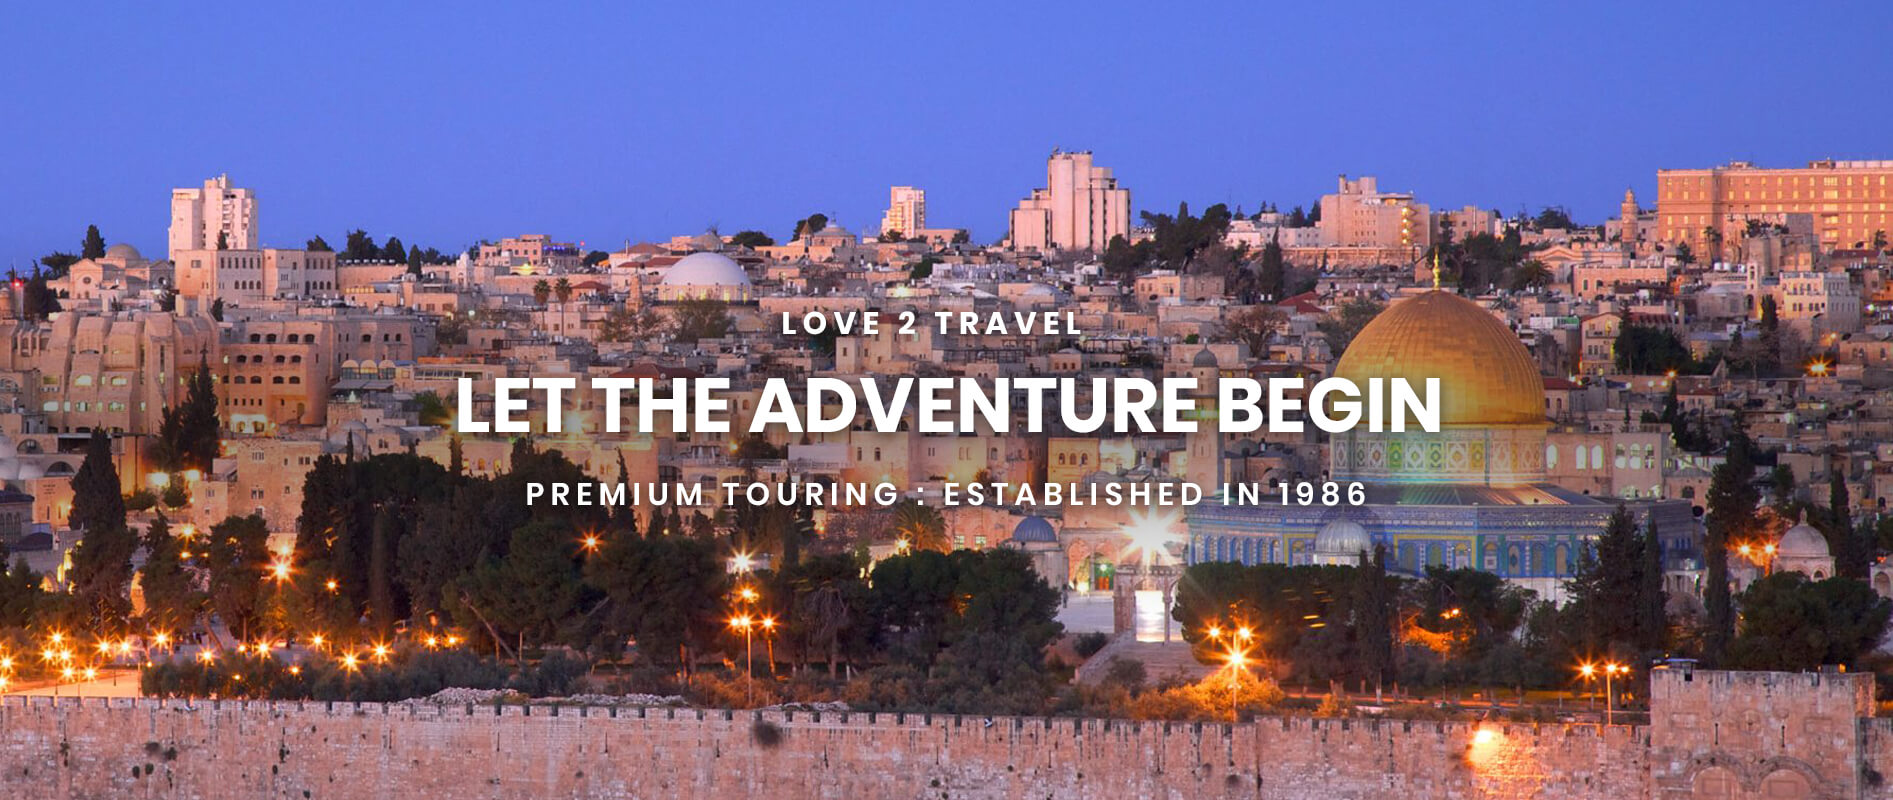 Love 2 Travel Holy Land Tours Israel Tours Visit Israel